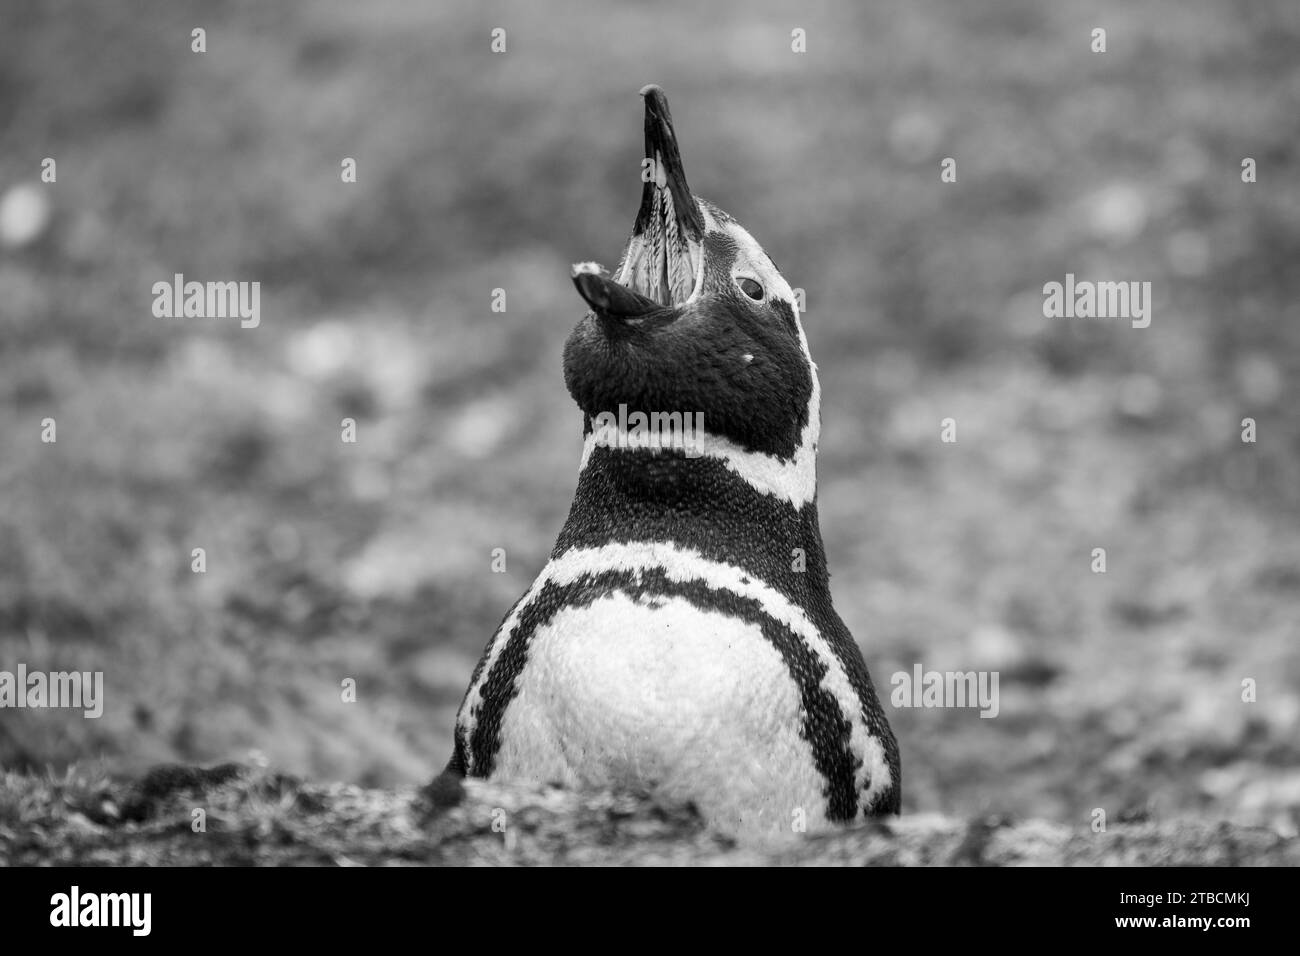 Isole Falkland, Falklands occidentali, Isola Saunders. Pinguino magellanico (Spheniscus magellanicus) a bocca aperta che mostra picchi di papillae. Foto Stock